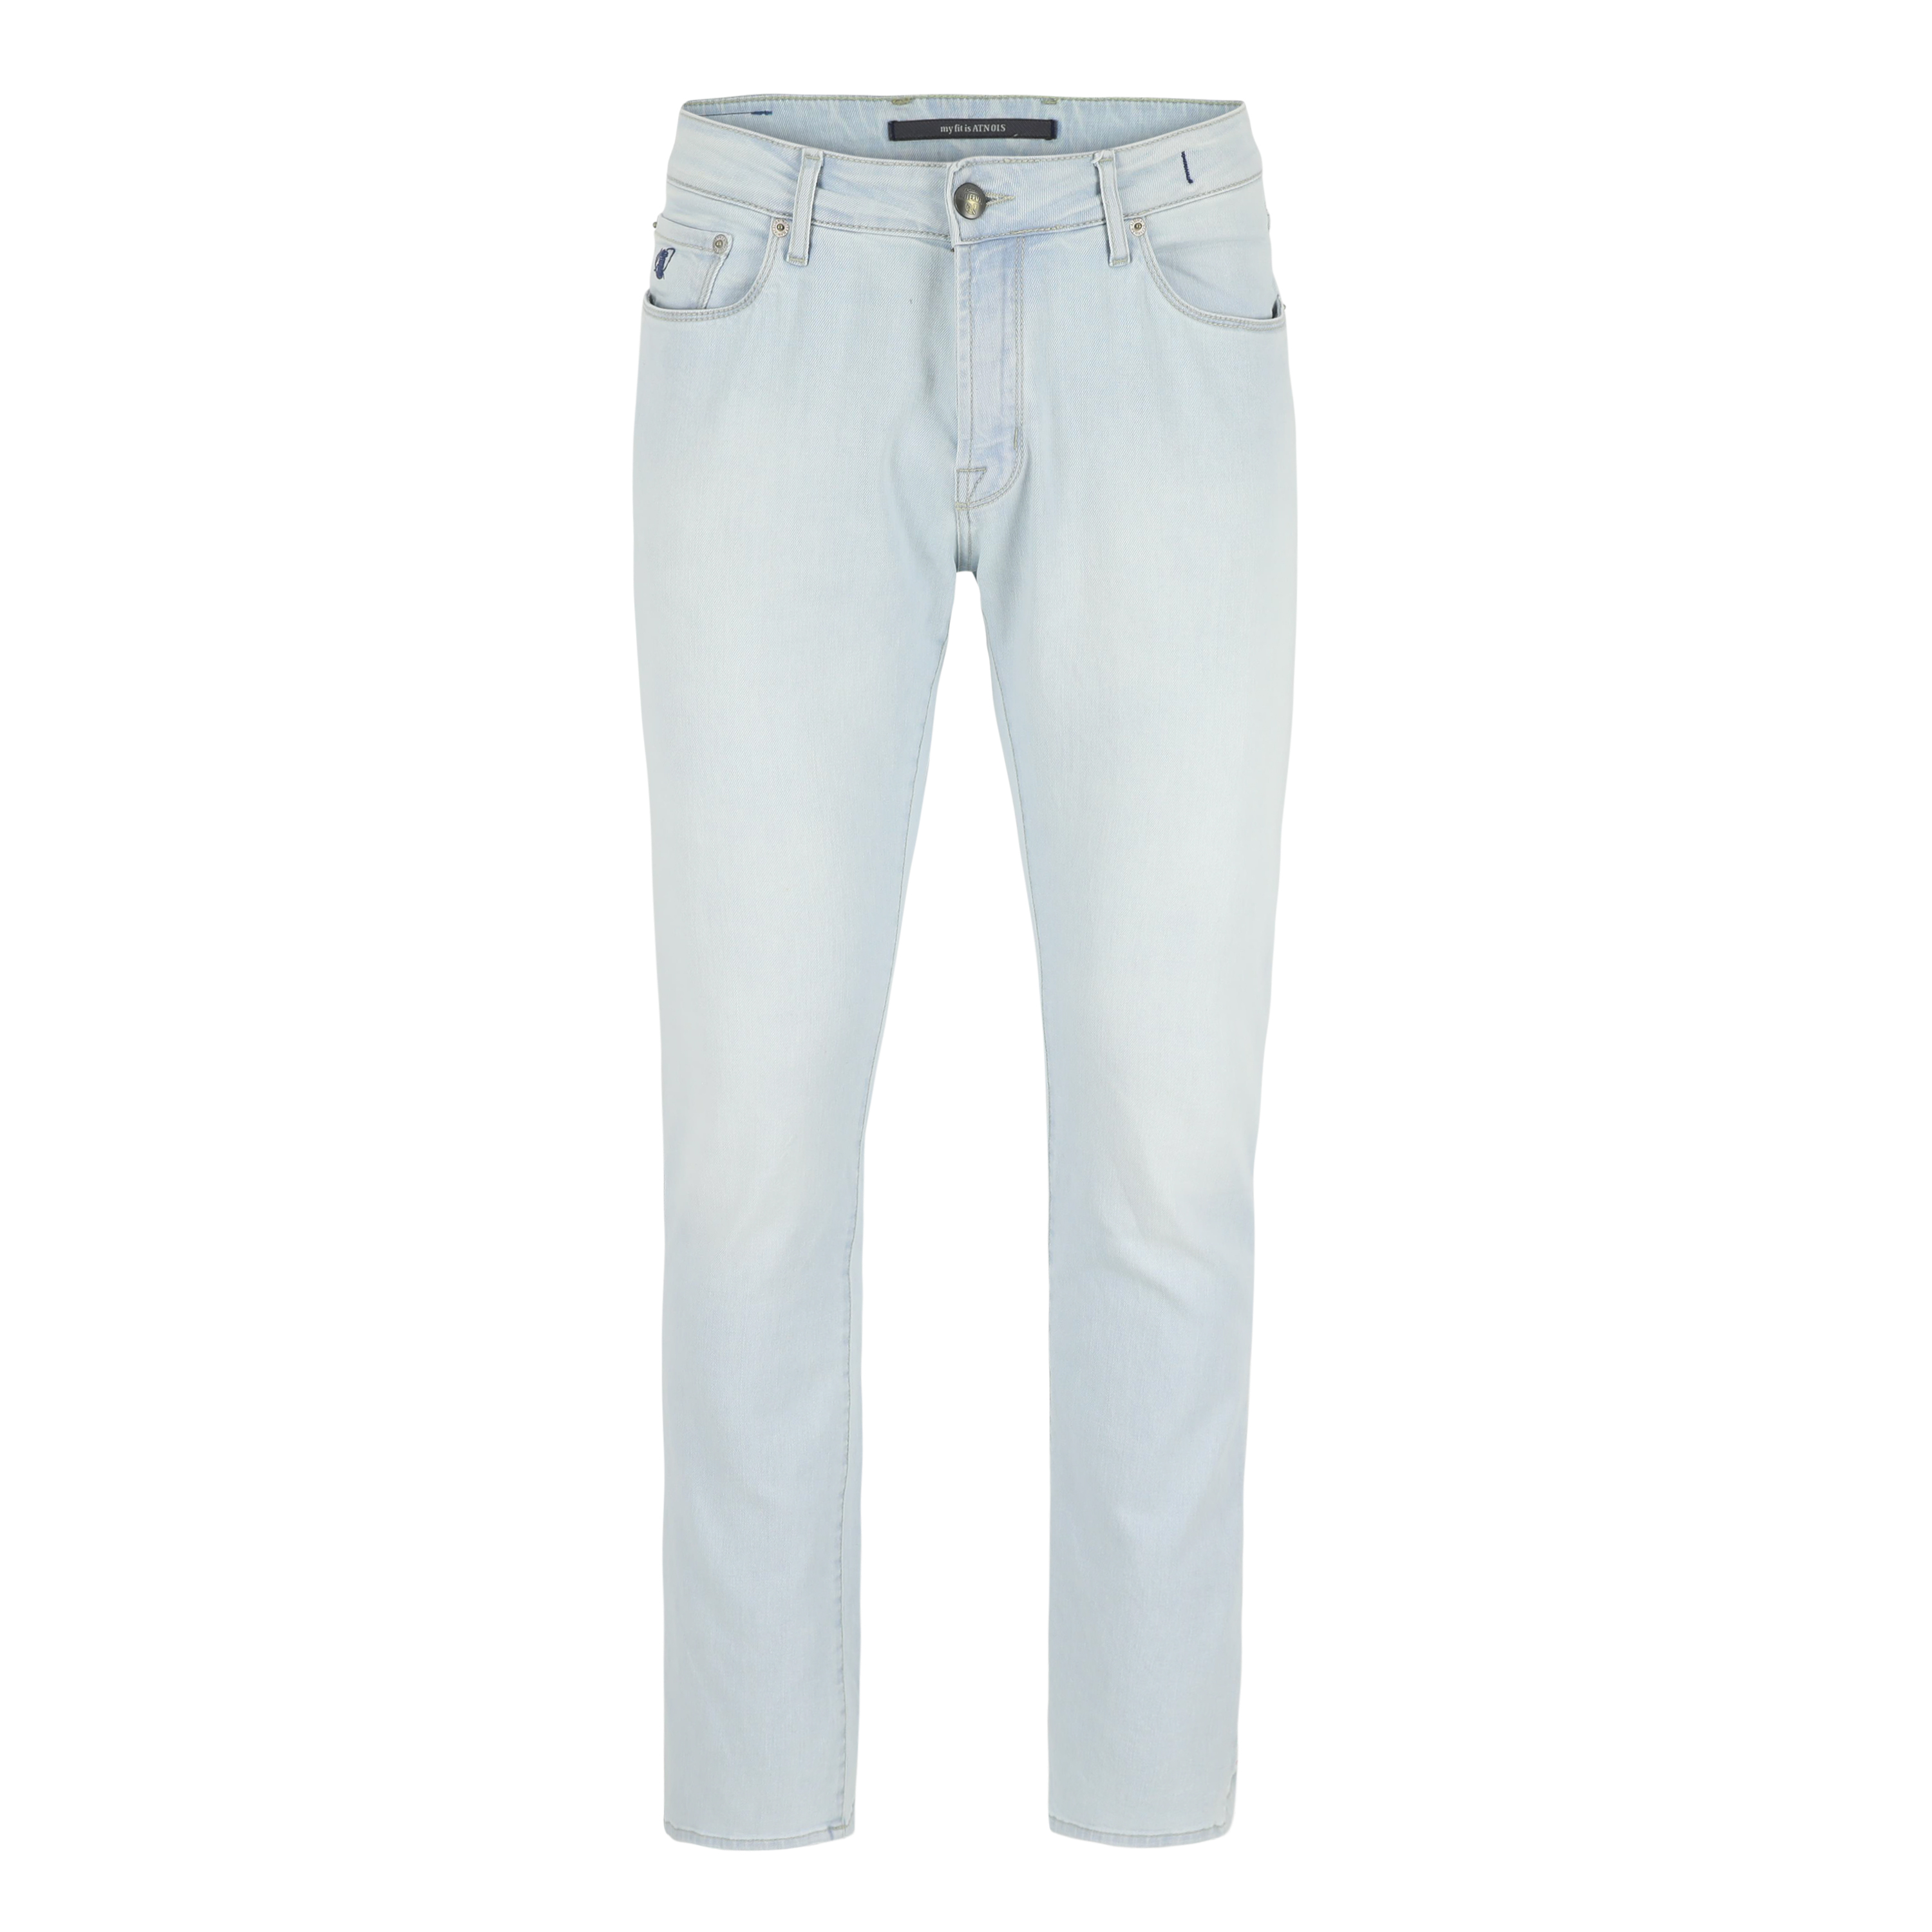 Atelier Noterman - jeans in blauwe denim in used wassing - 31/34 - Heren